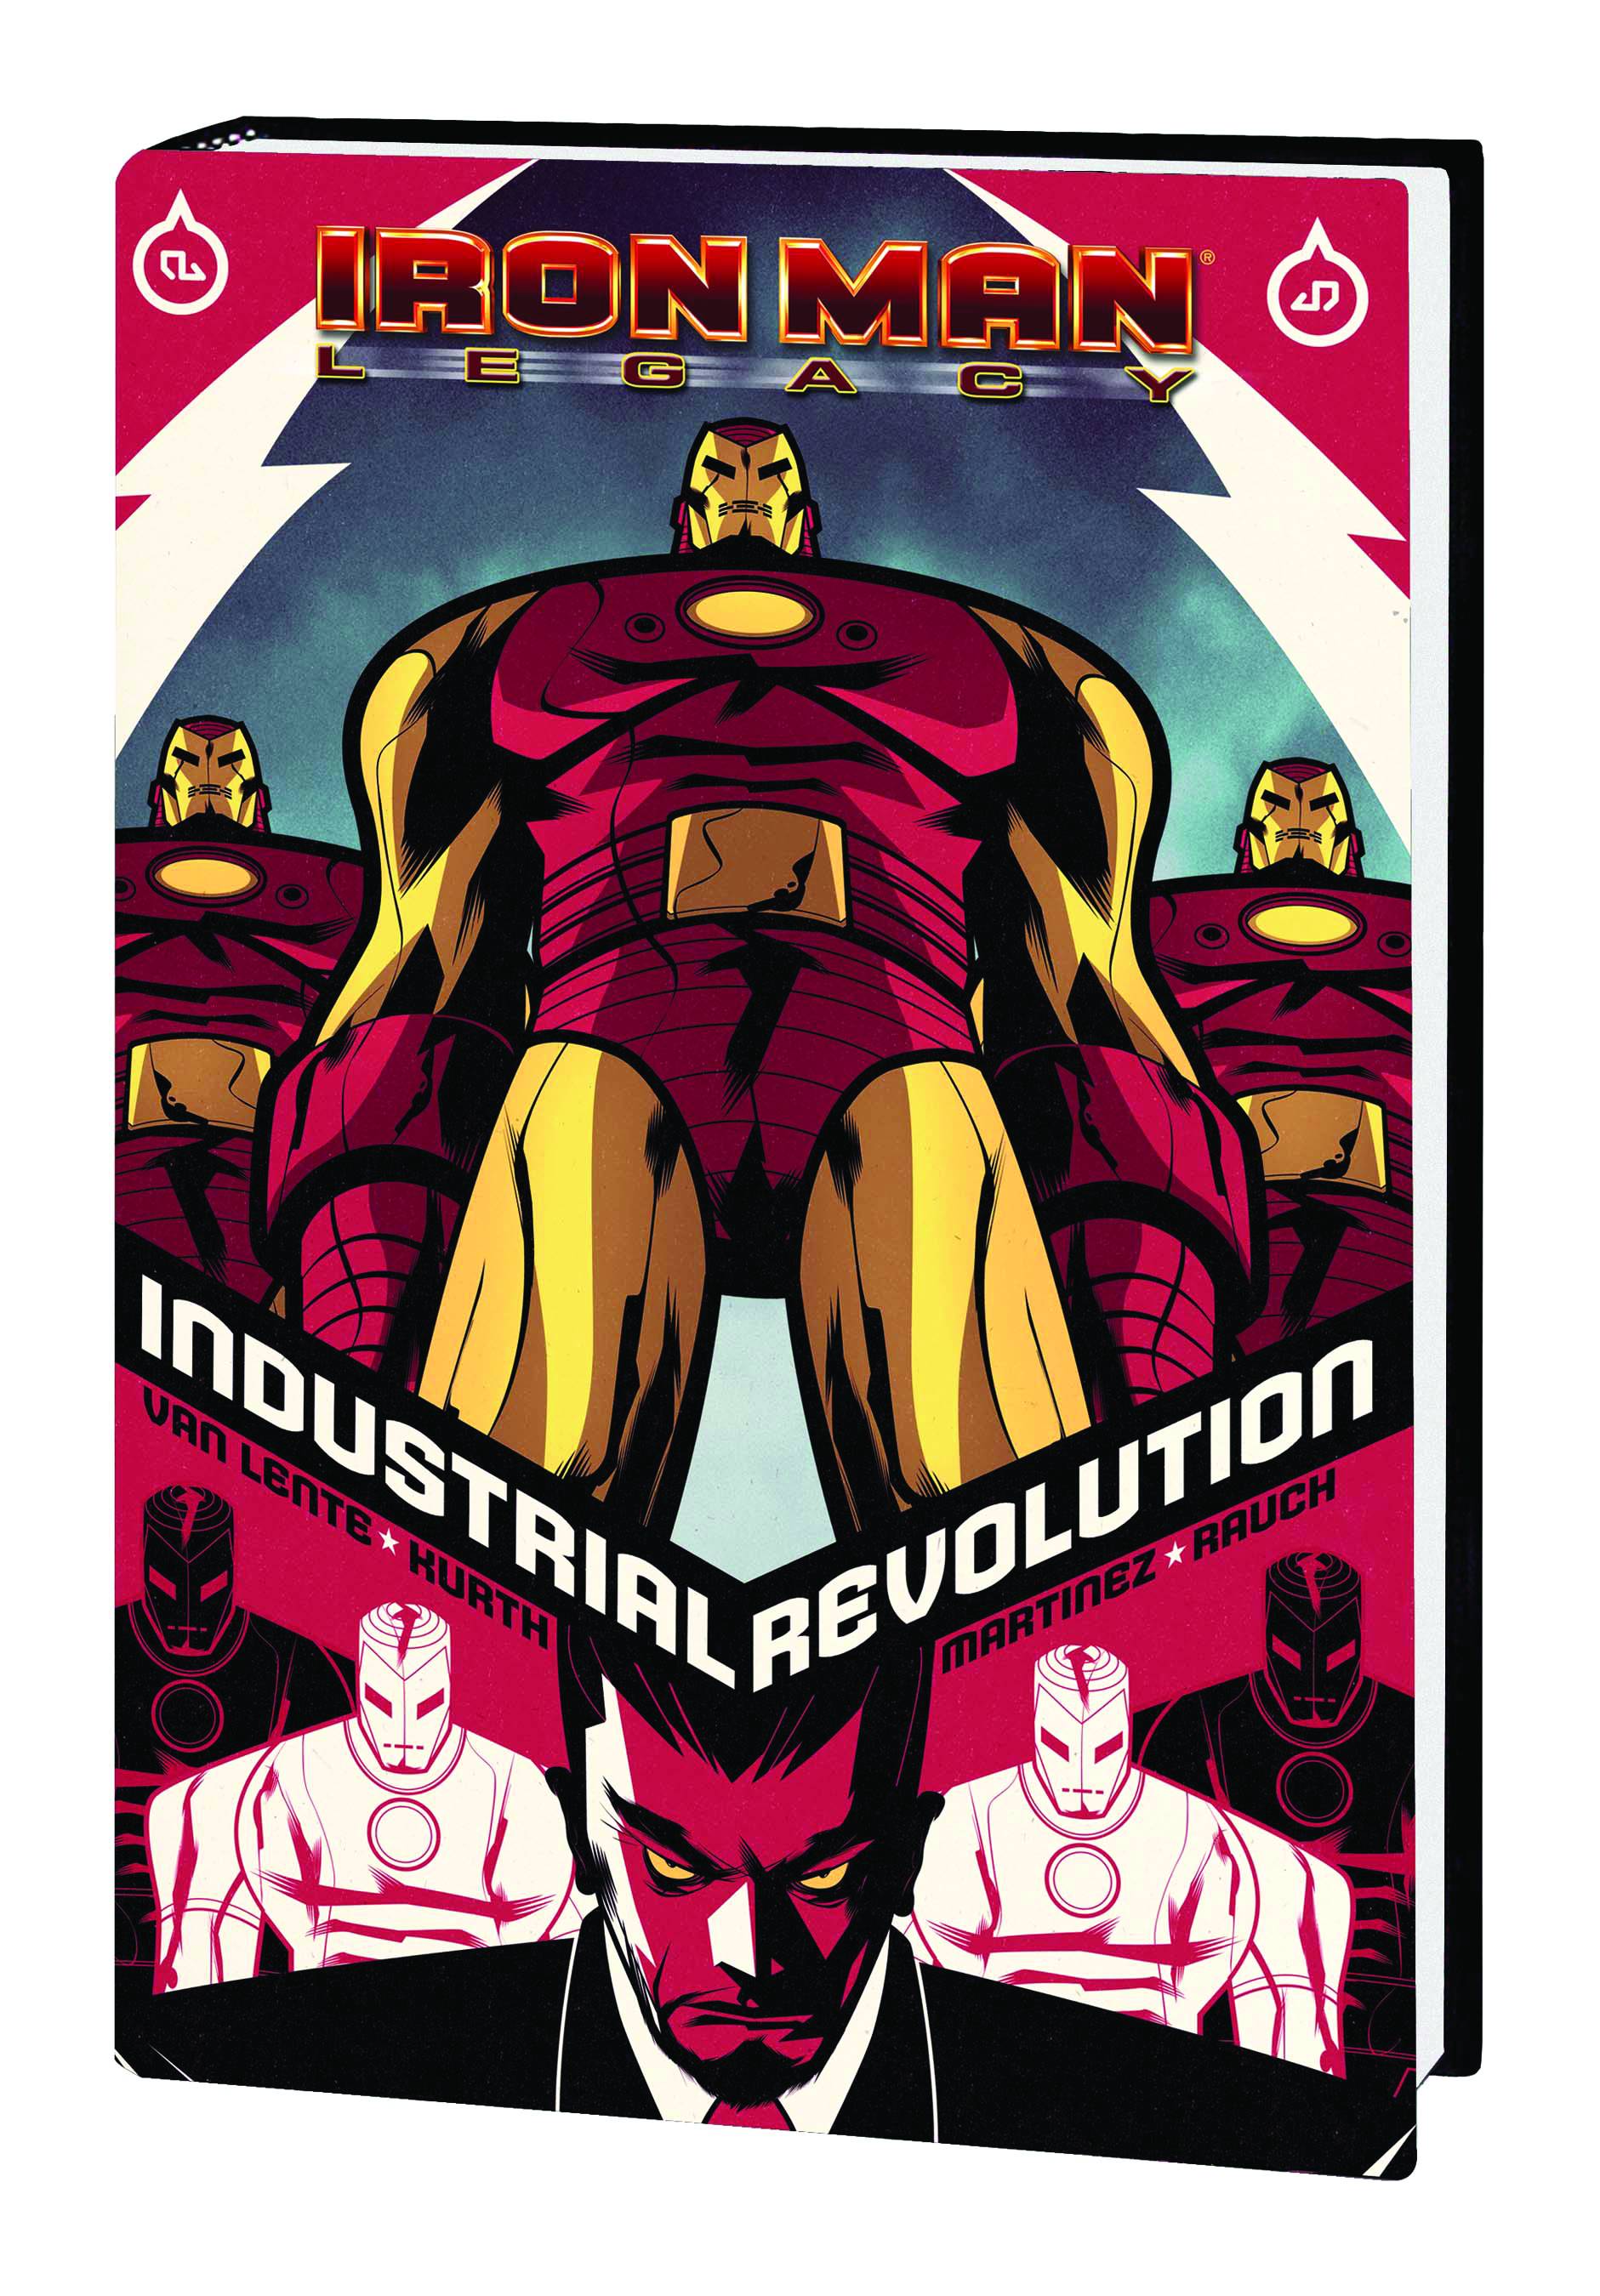 Iron Man Industrial Revolution Hardcover Graphic Novel